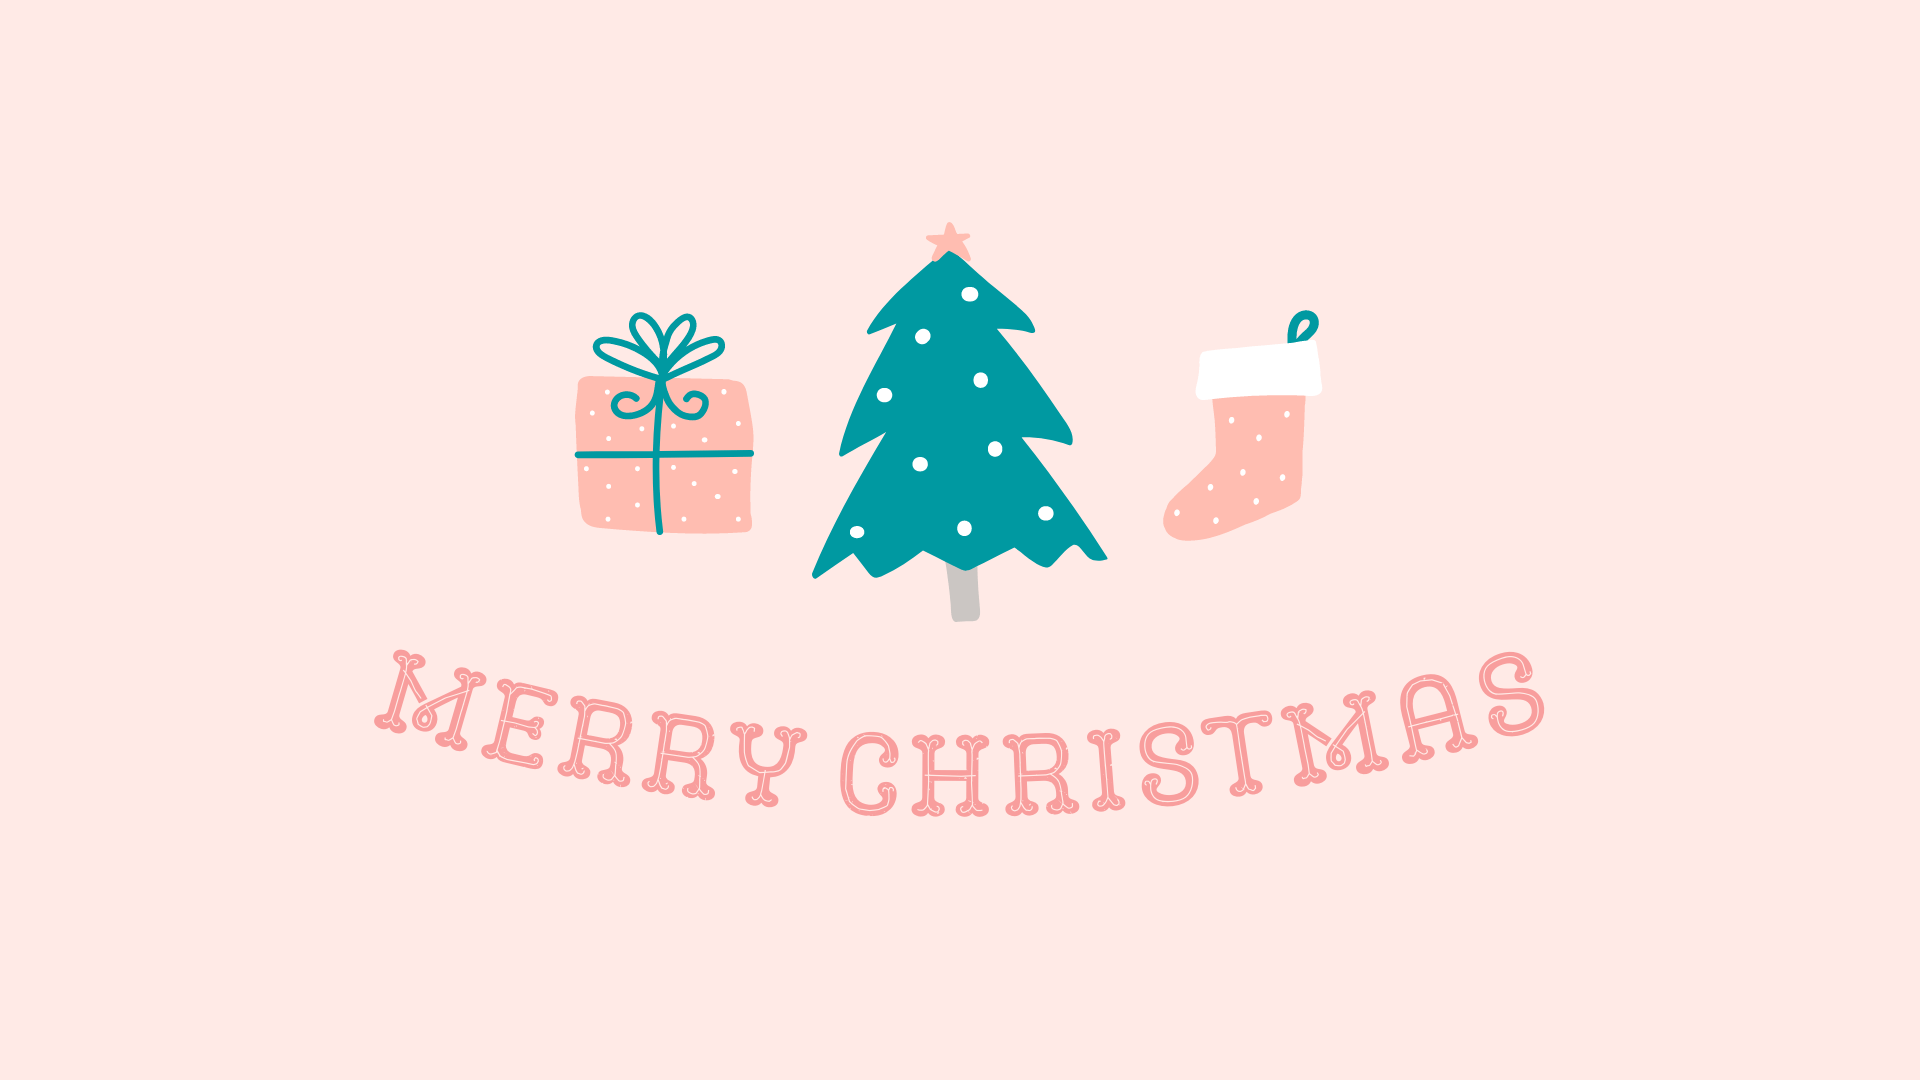 Merry christmas illustration with a tree, presents and socks - Christmas, cute Christmas, desktop